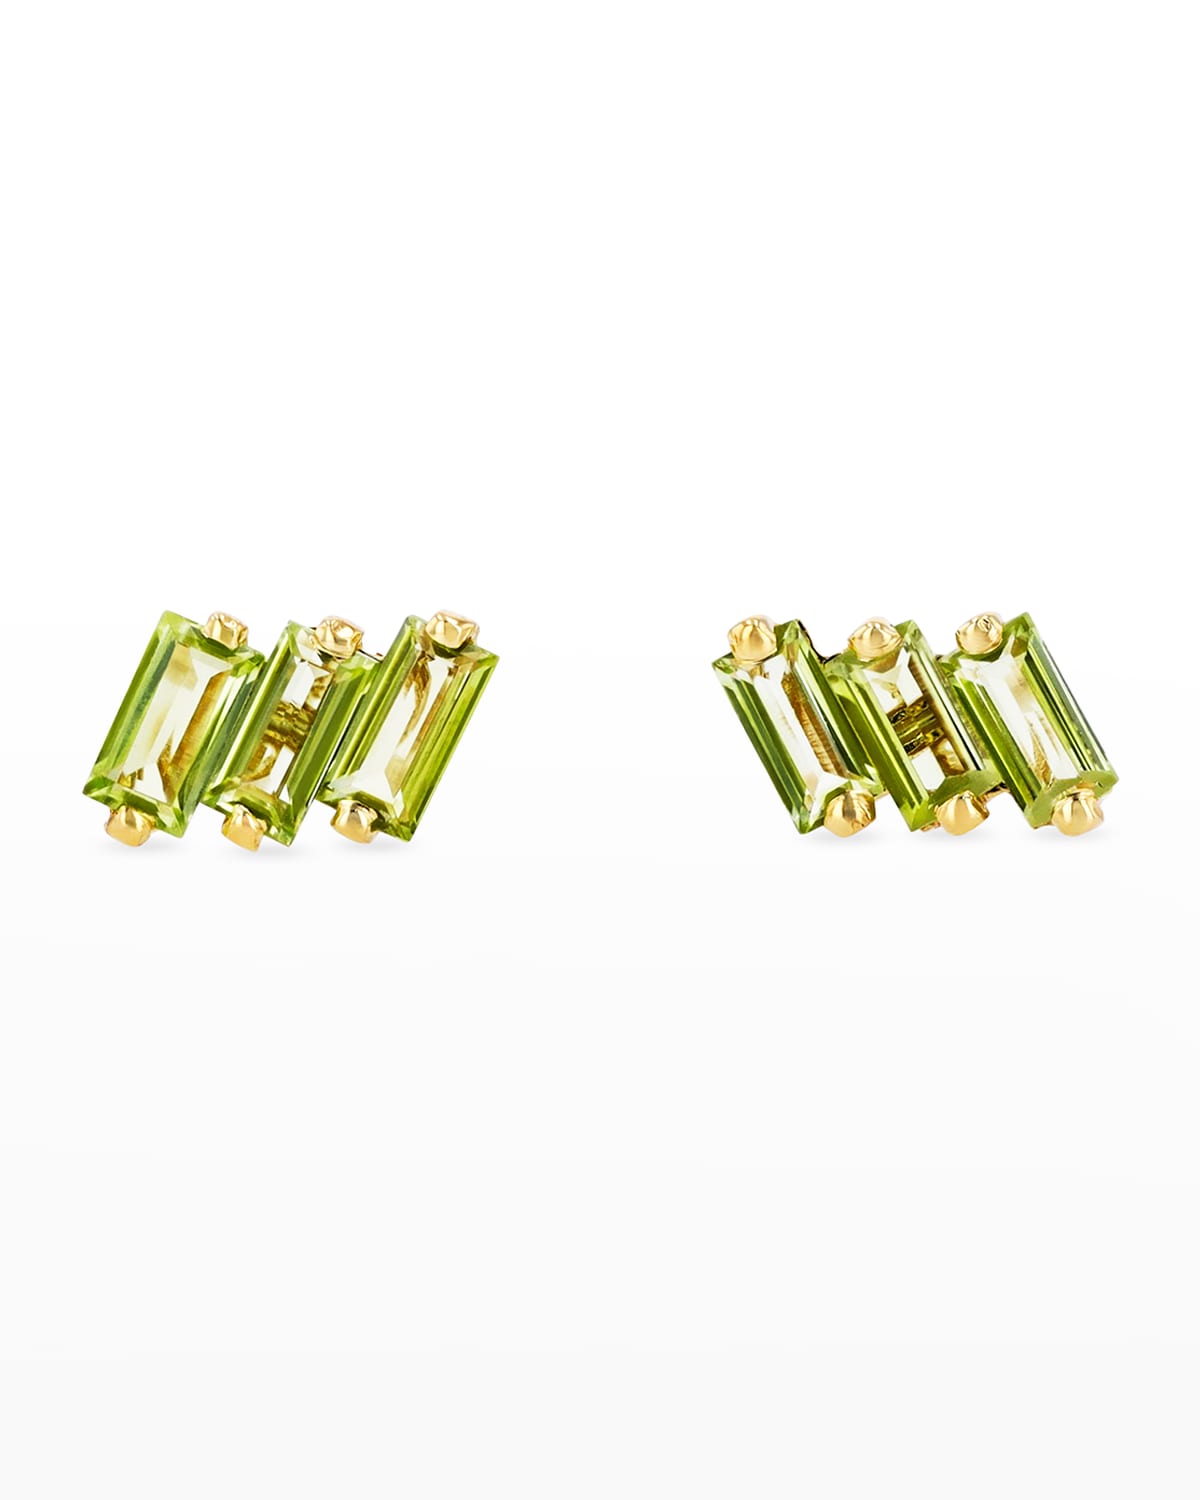 KALAN by Suzanne Kalan 14K Gold Mini Stud Earrings with Green Envy Topaz, Peridot and Green Amethyst